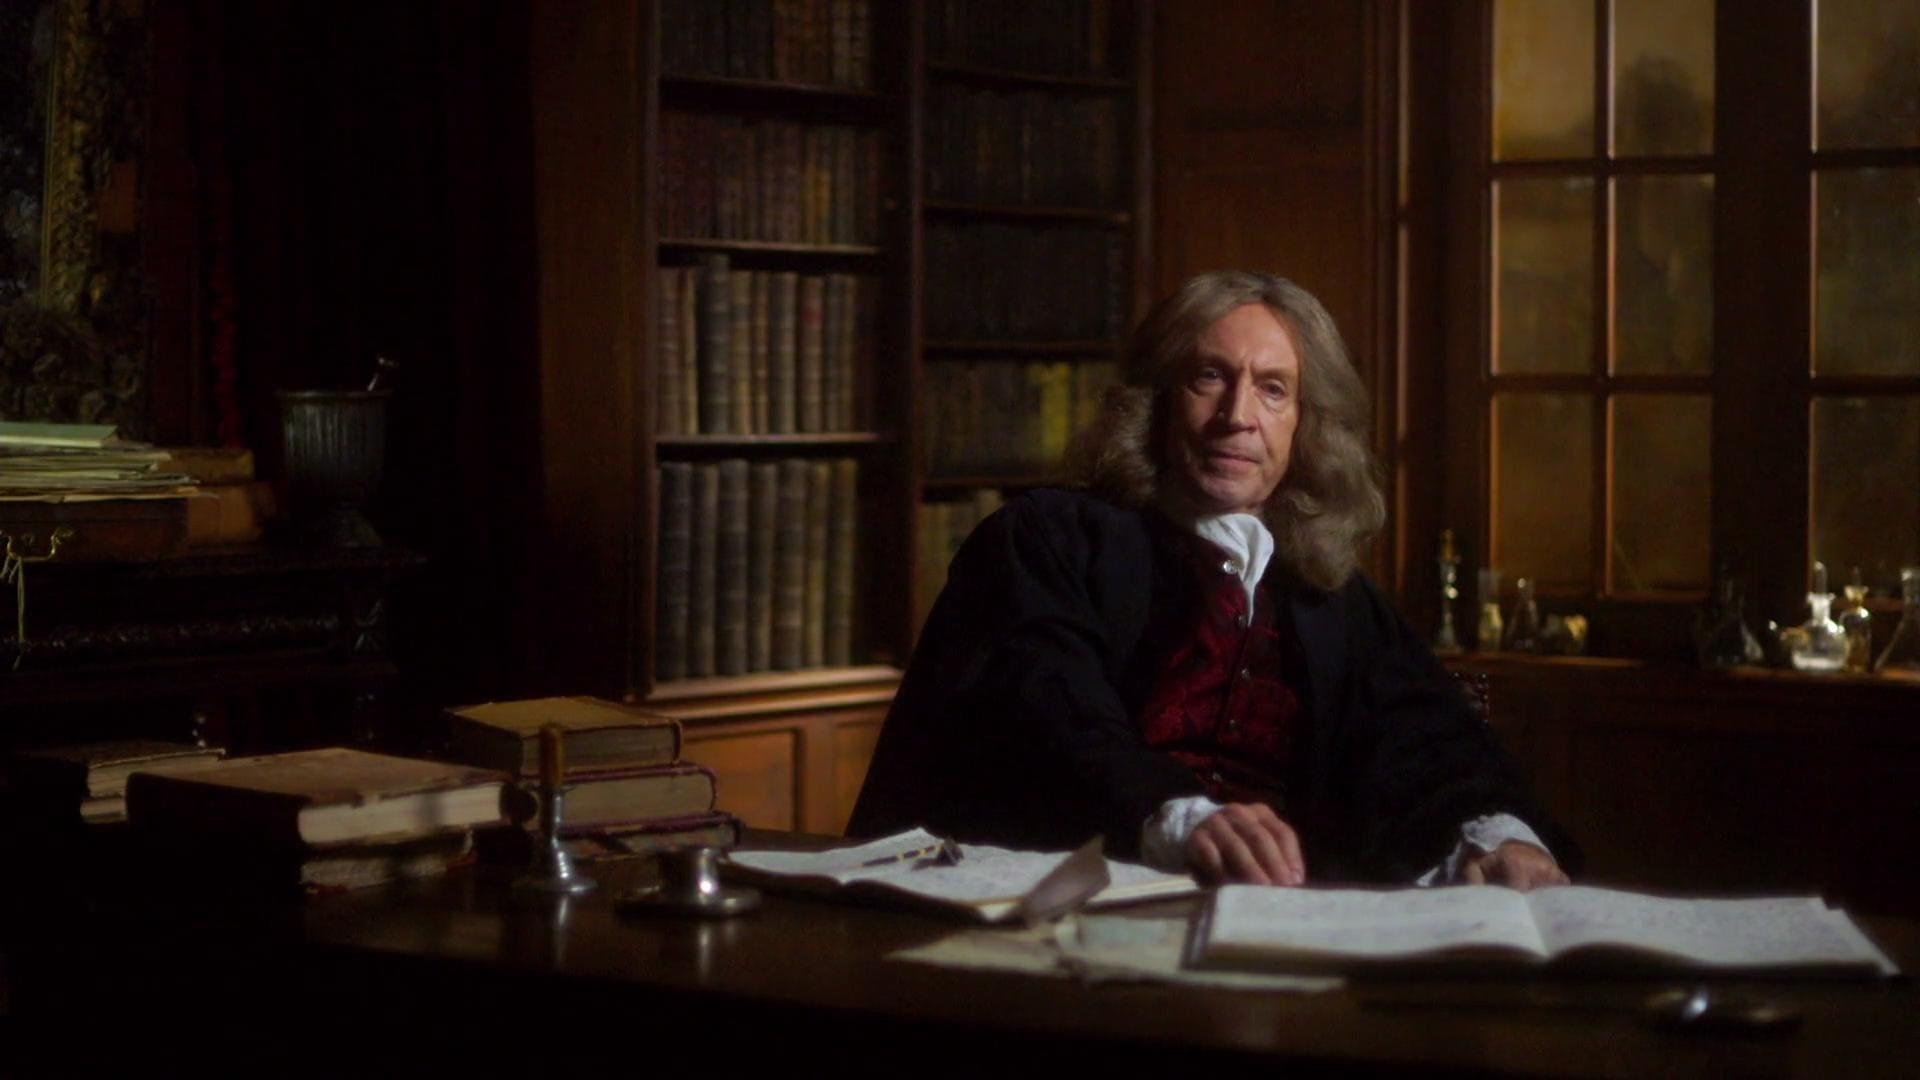 Isaac Newton: The Last Magician backdrop